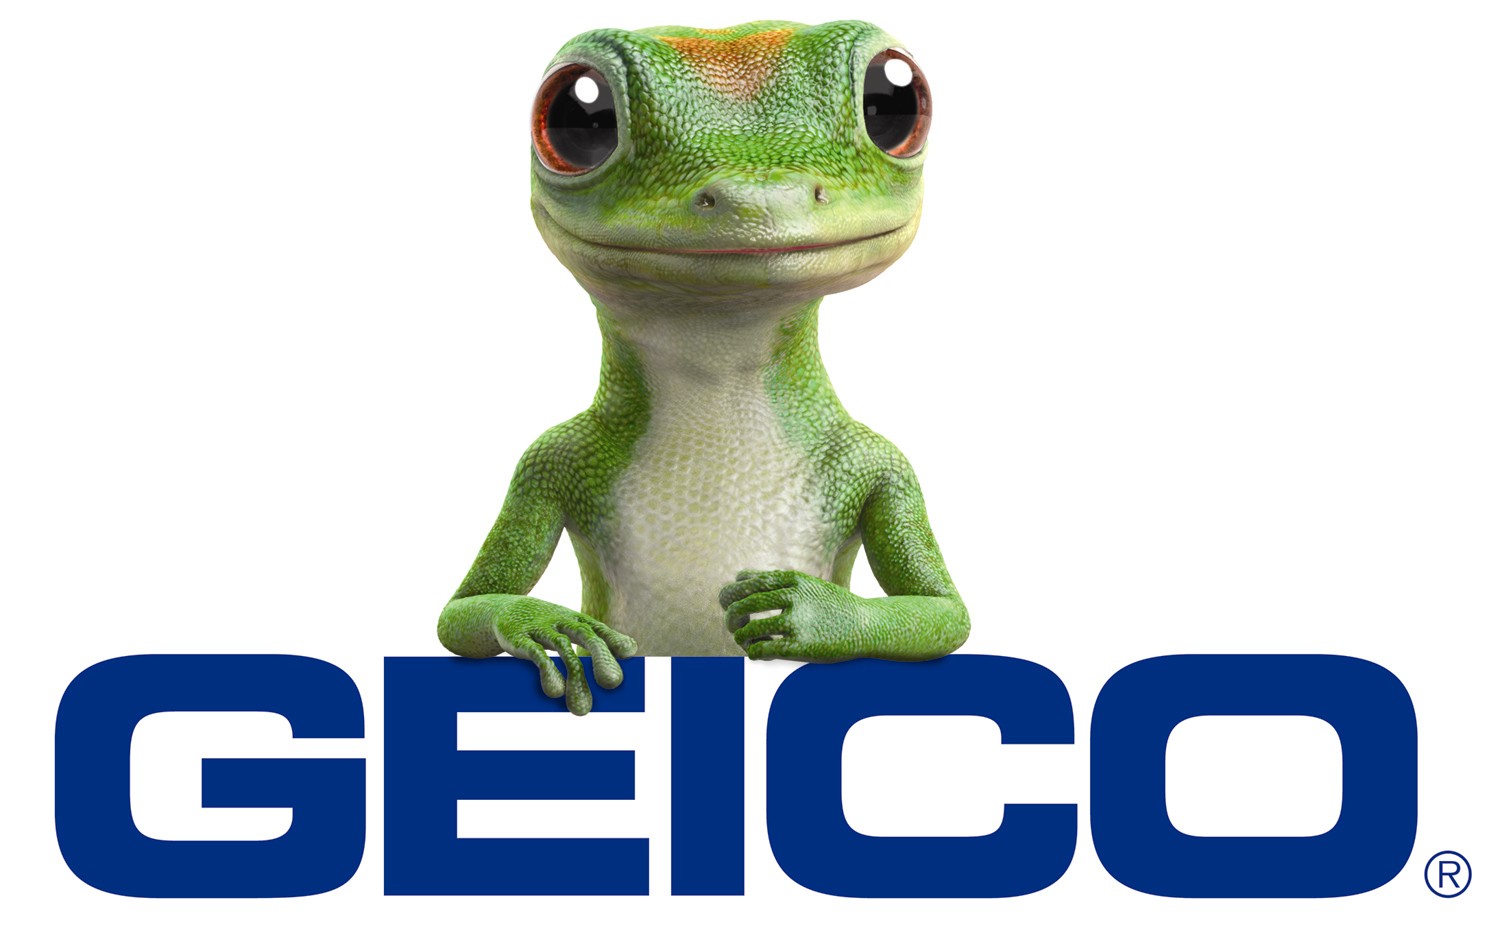 geico-logo-with-gecko.jpg